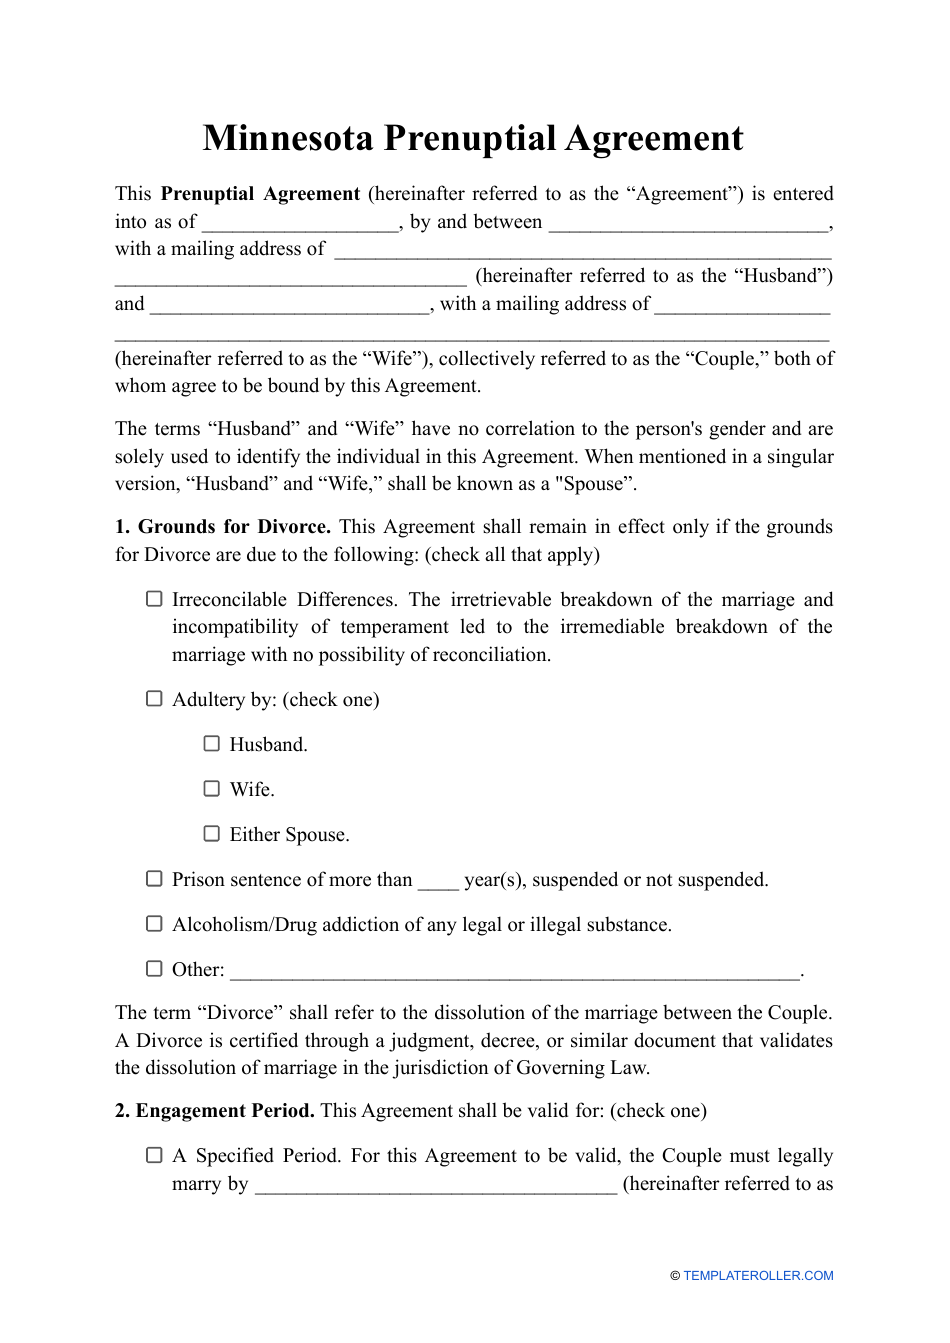 Prenuptial Agreement Template - Minnesota, Page 1